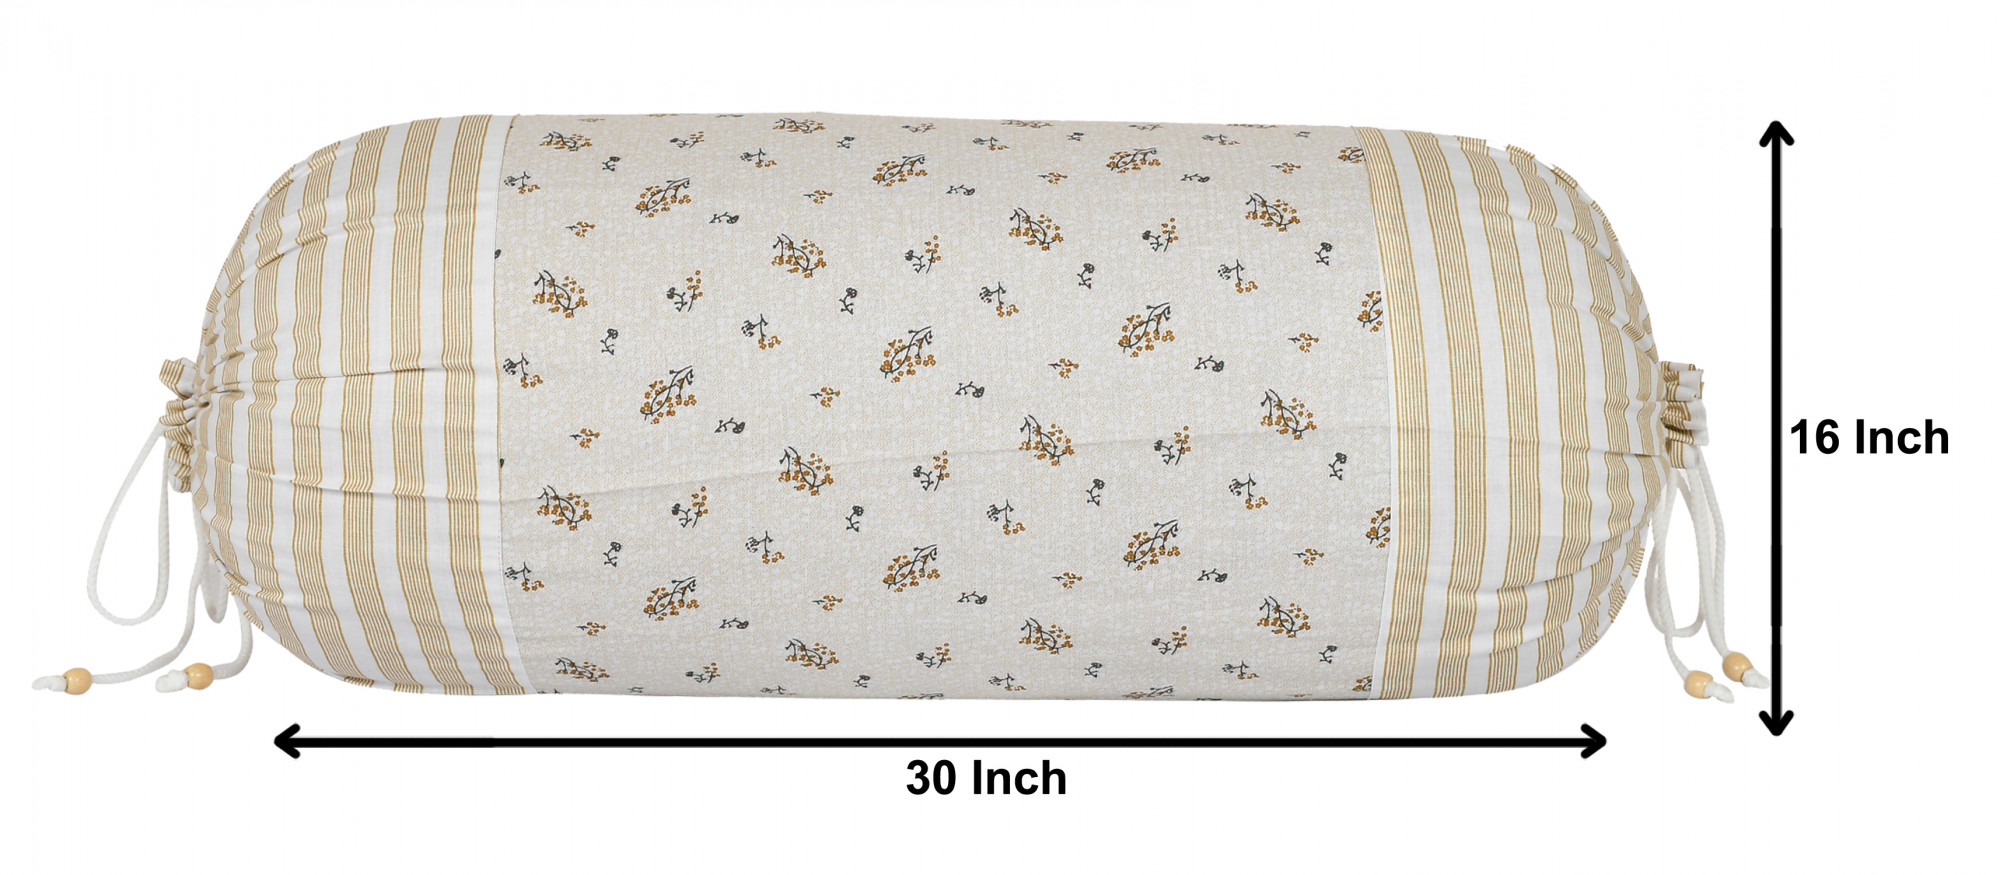 Kuber Industries Leaf Design Premium Cotton Bolster Covers, 16 x 30 inch,(Cream)